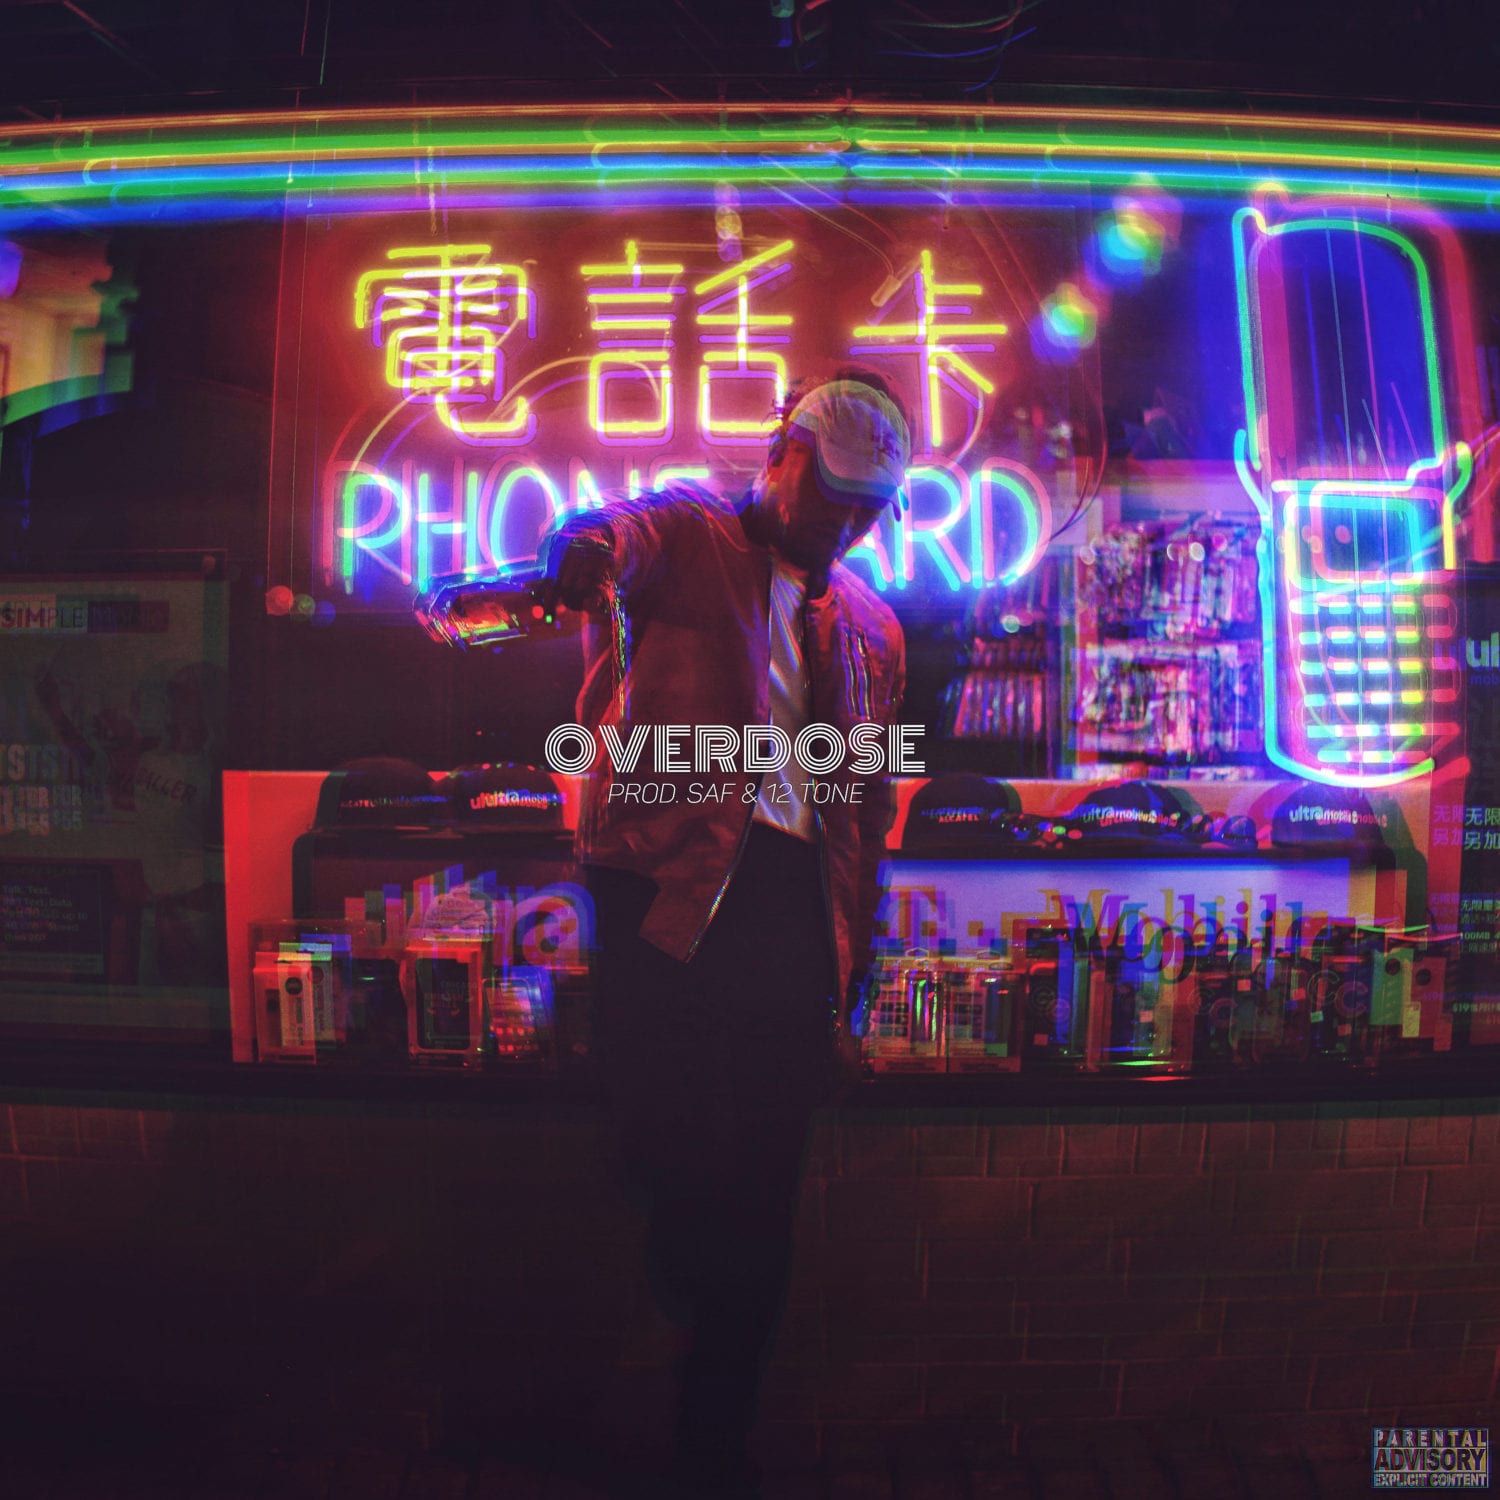 Chicago Newcomer Austin Fillmore Drops New Single - Overdose (Prod. By Saf & 12 Tone)